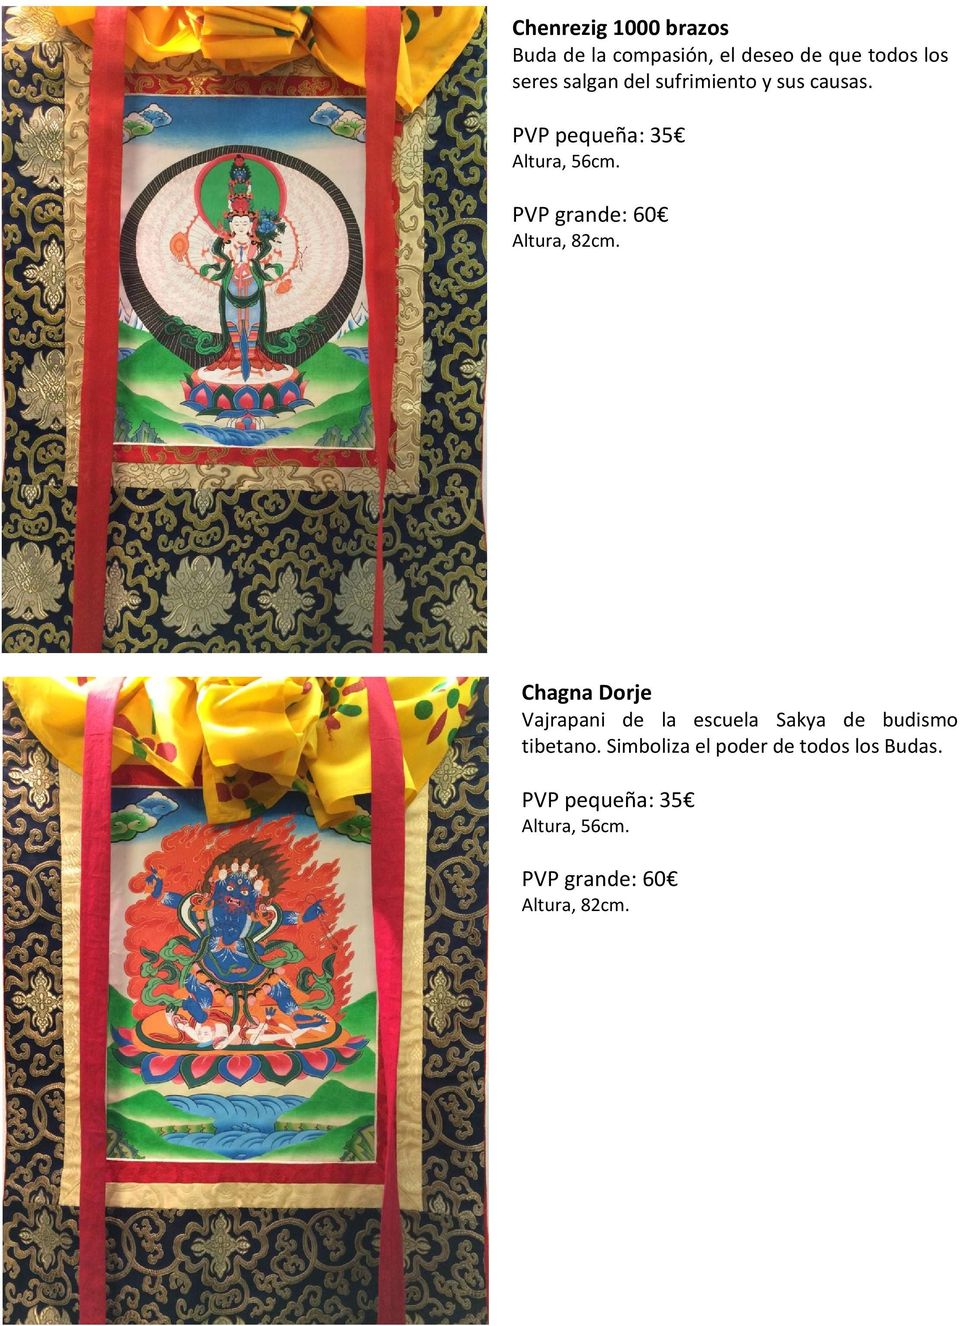 PVP grande: 60 Chagna Dorje Vajrapani de la escuela Sakya de budismo